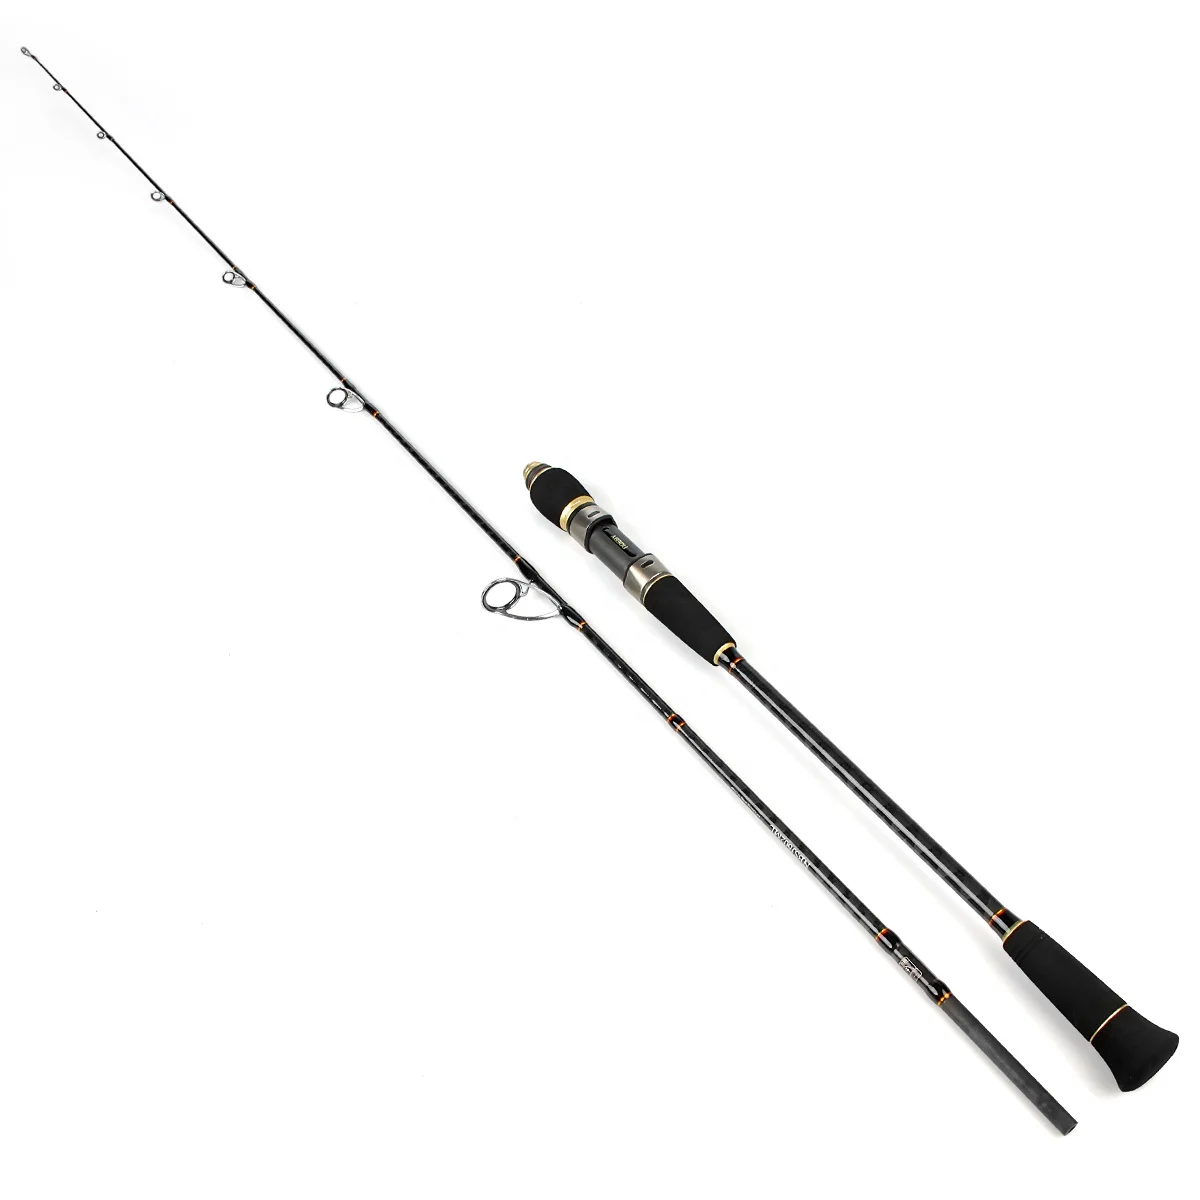 High quality fishing jigging rod blanks